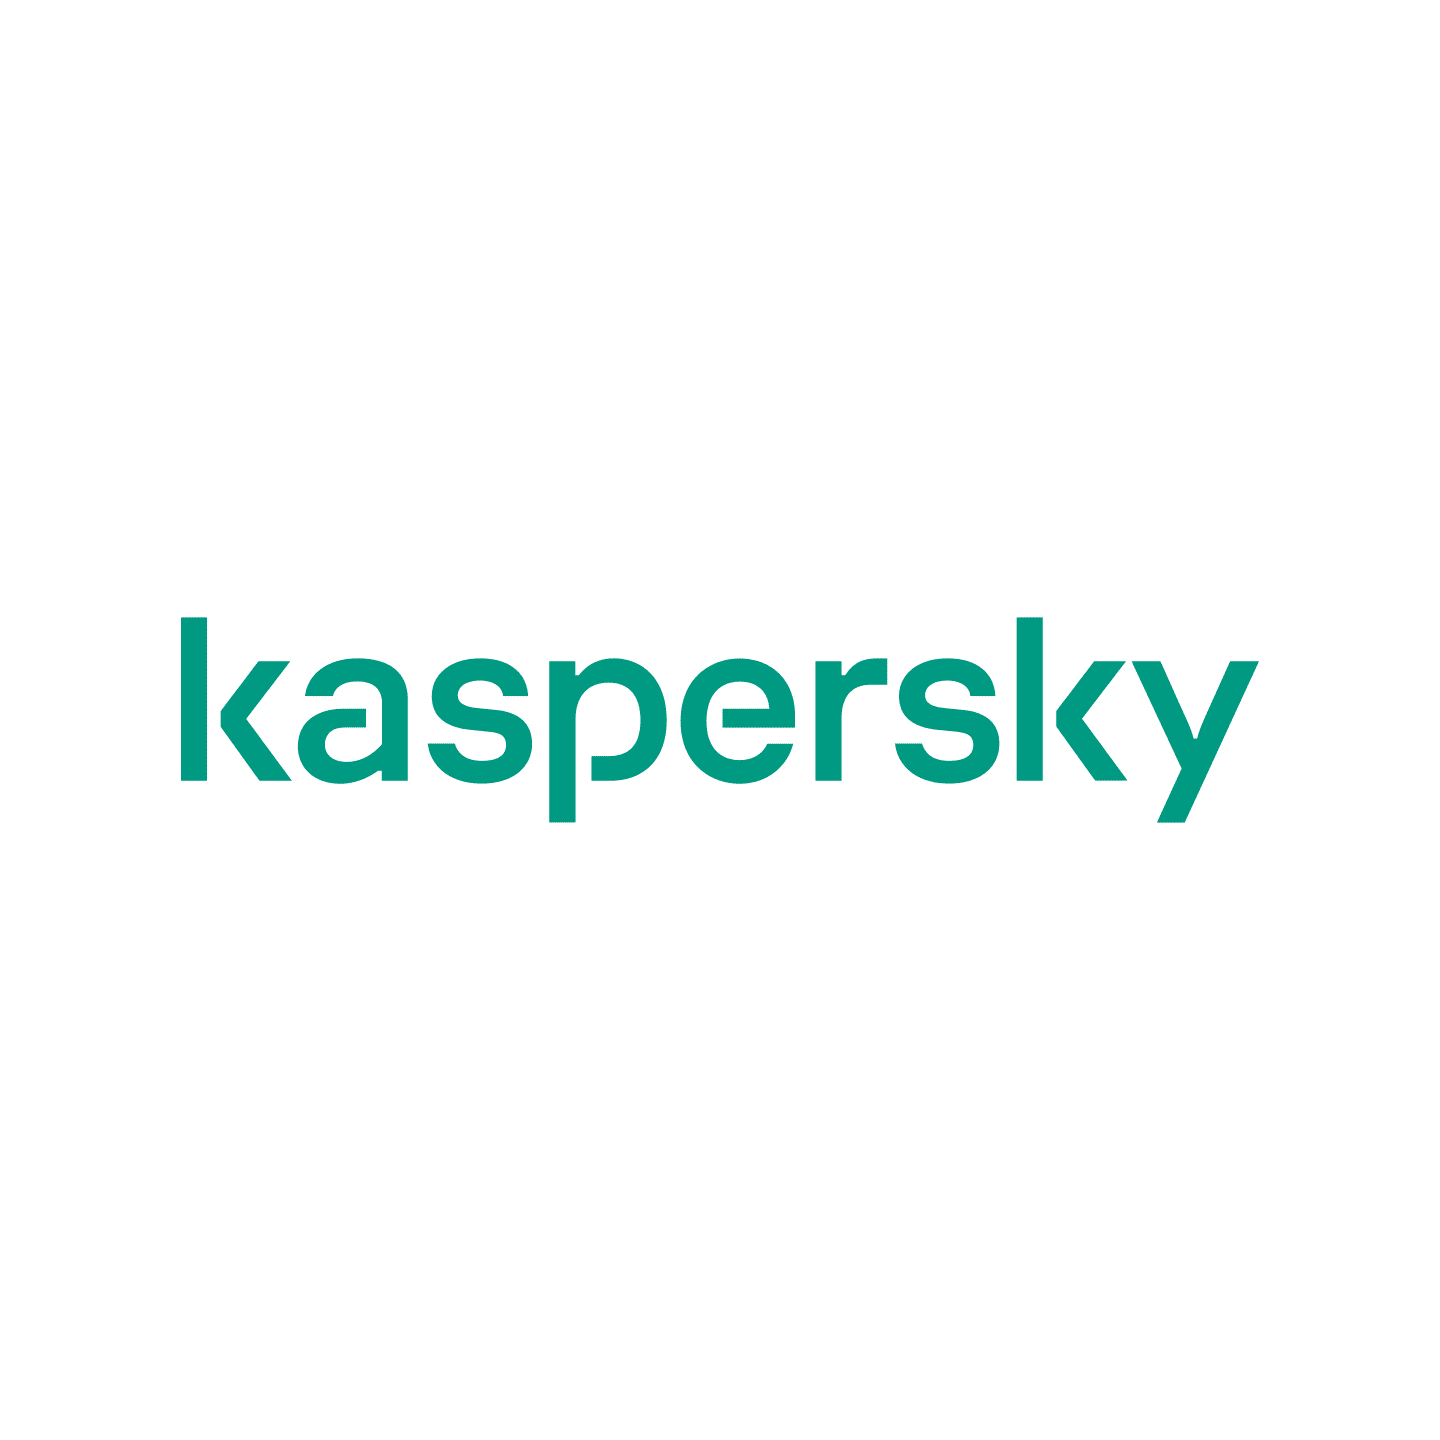 Kaspersky - Logo